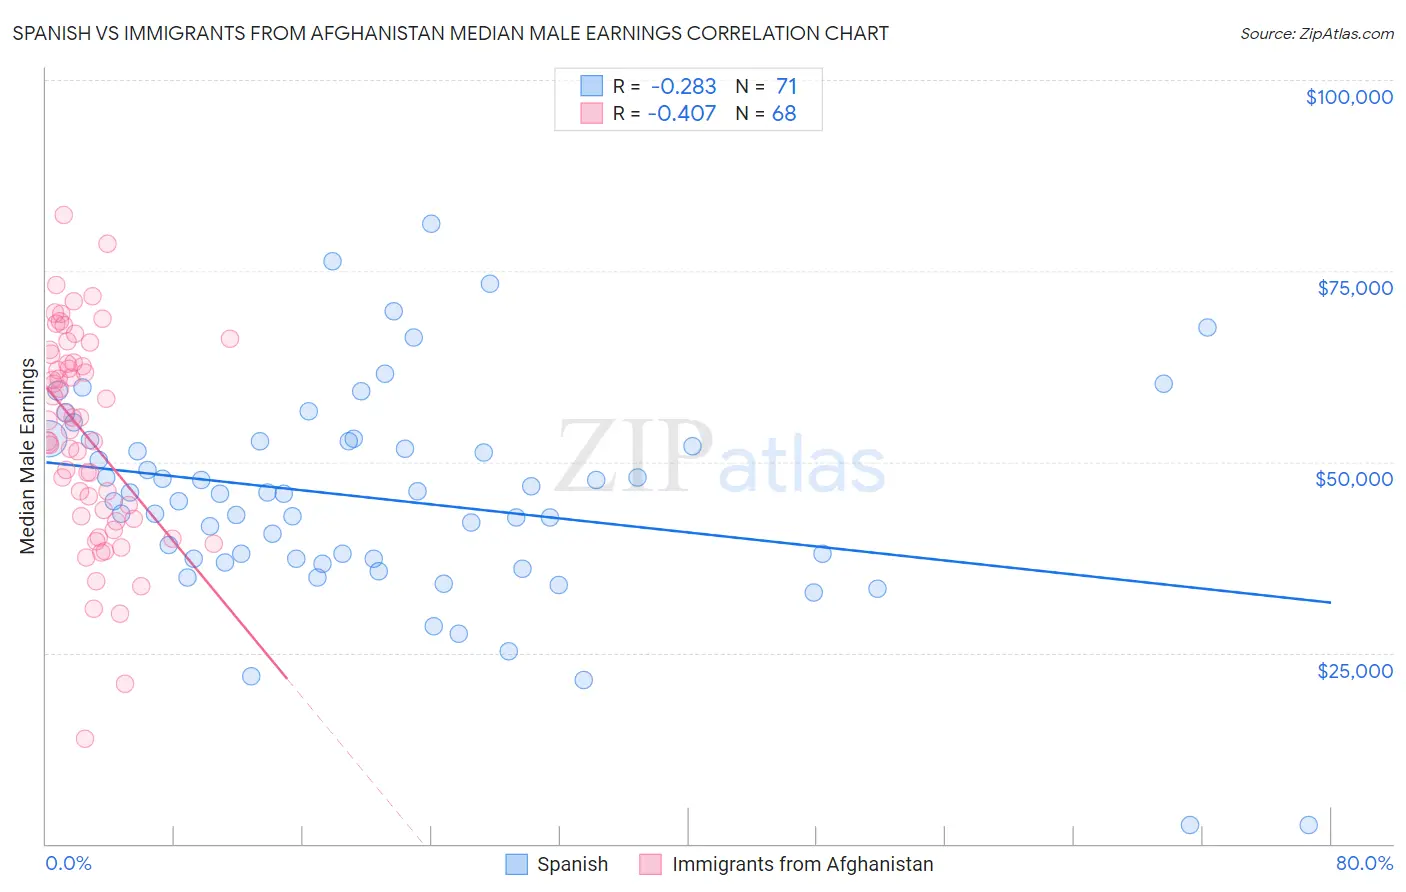 Spanish vs Immigrants from Afghanistan Median Male Earnings